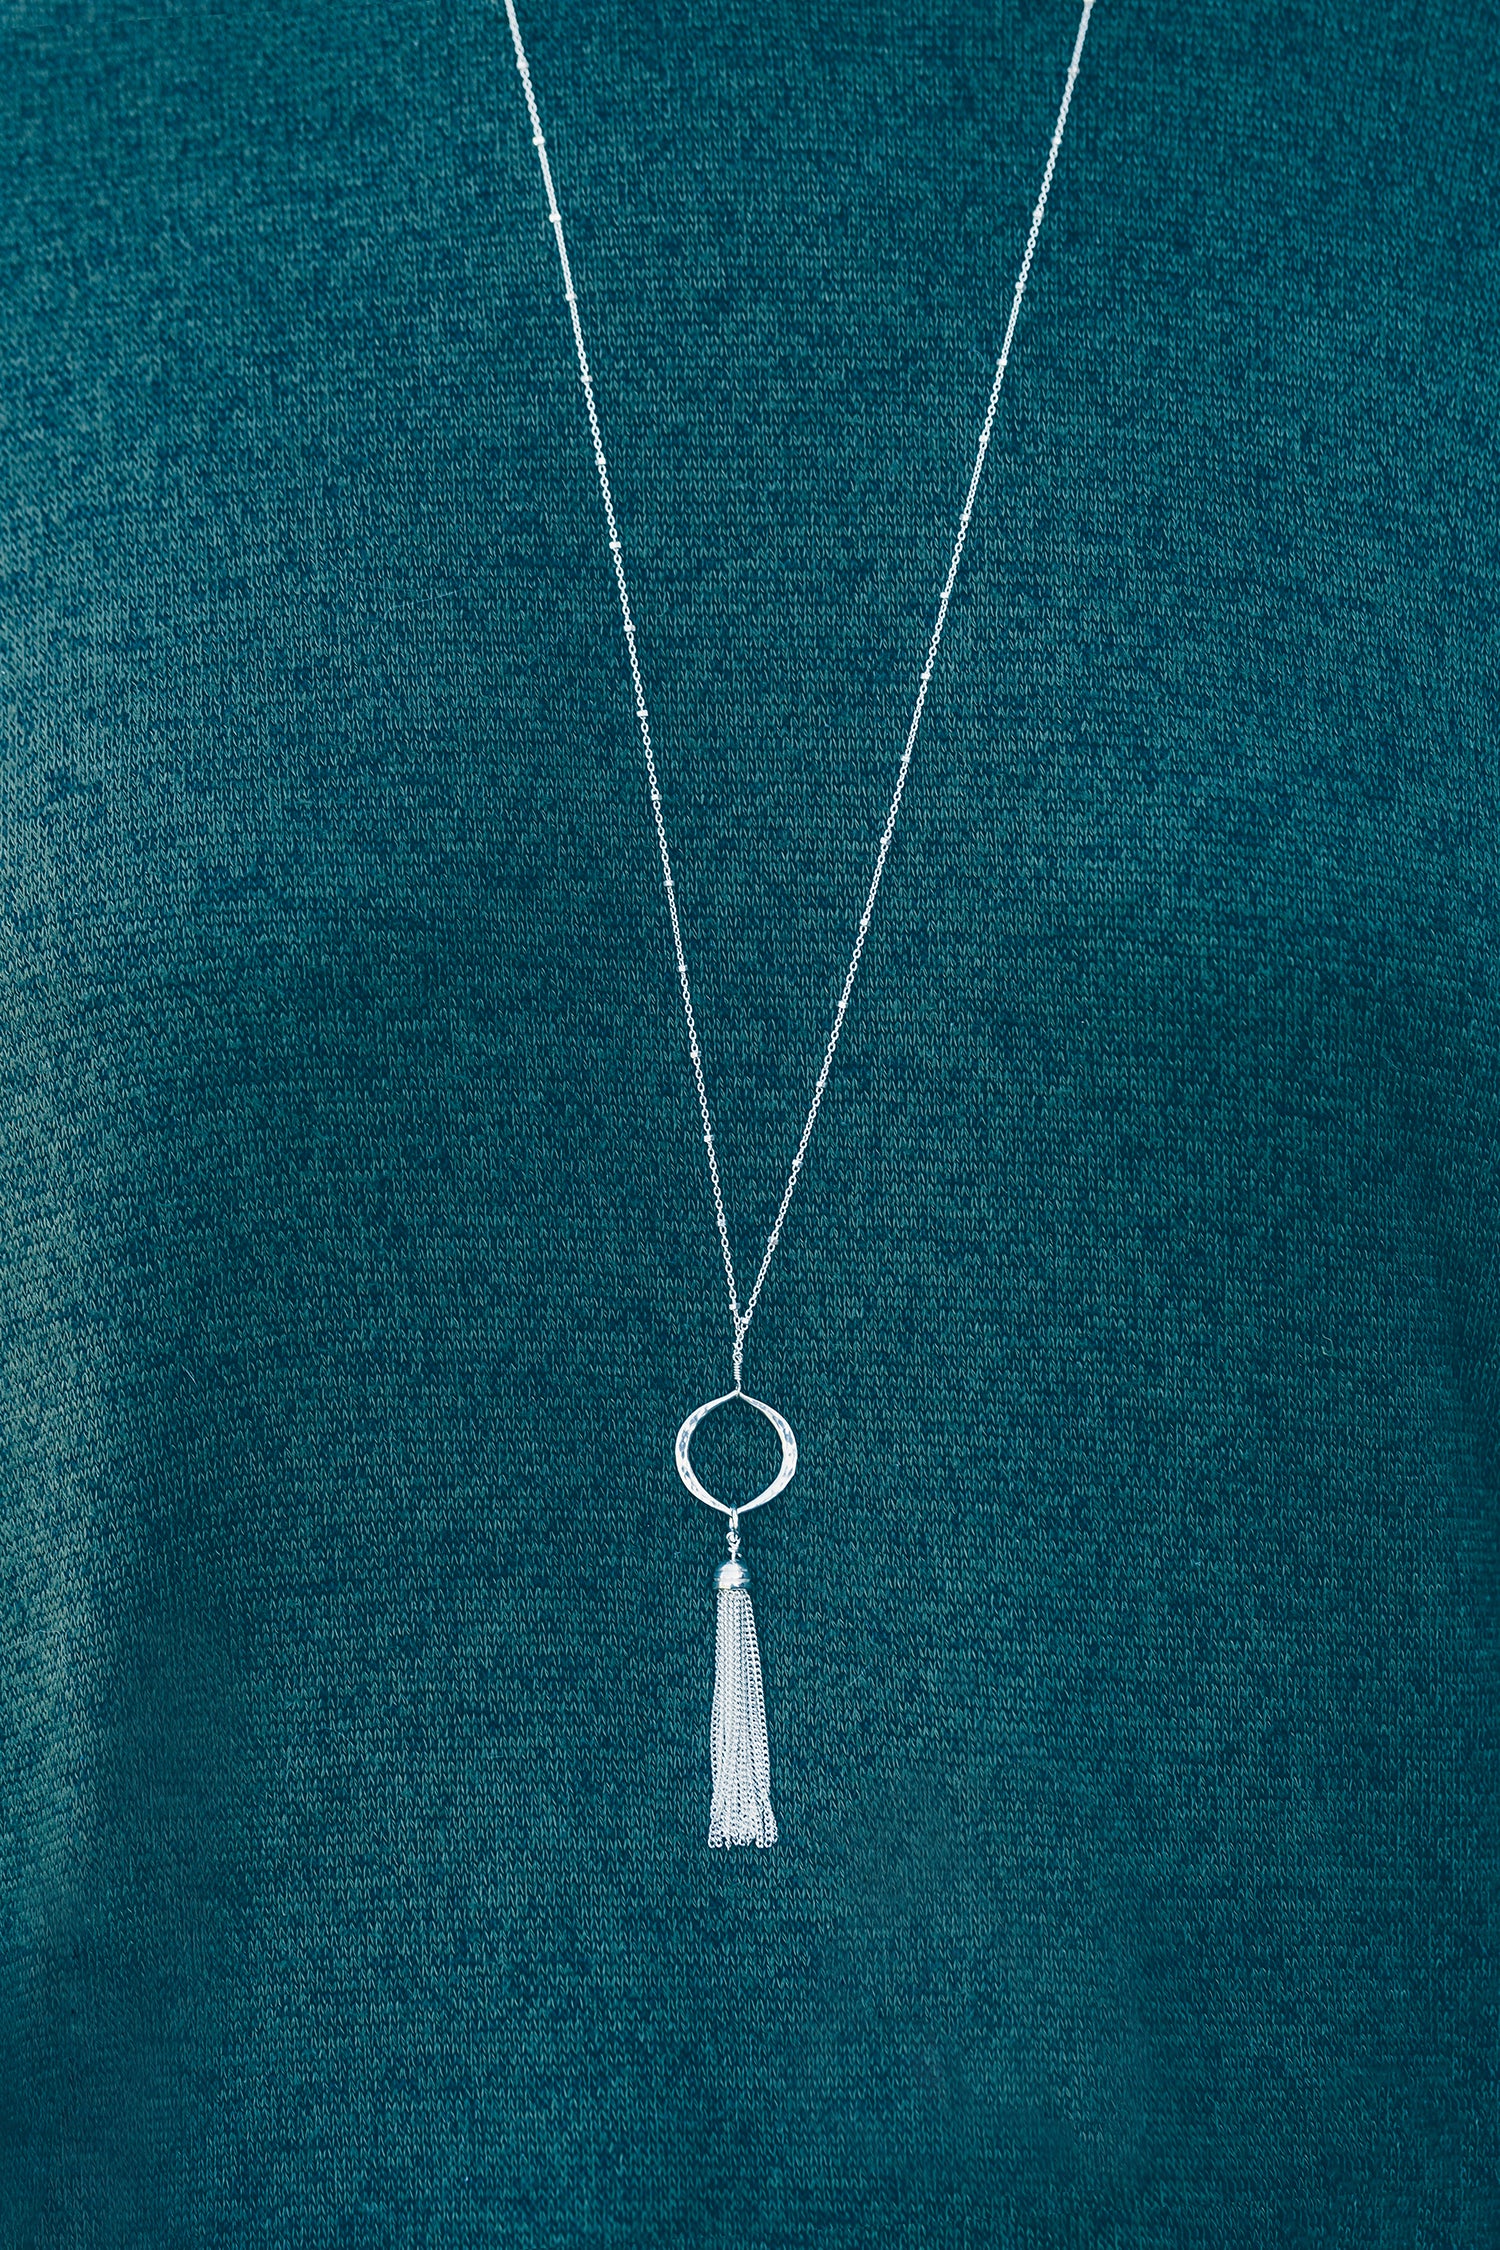 Long Sterling Silver Tassel Necklace